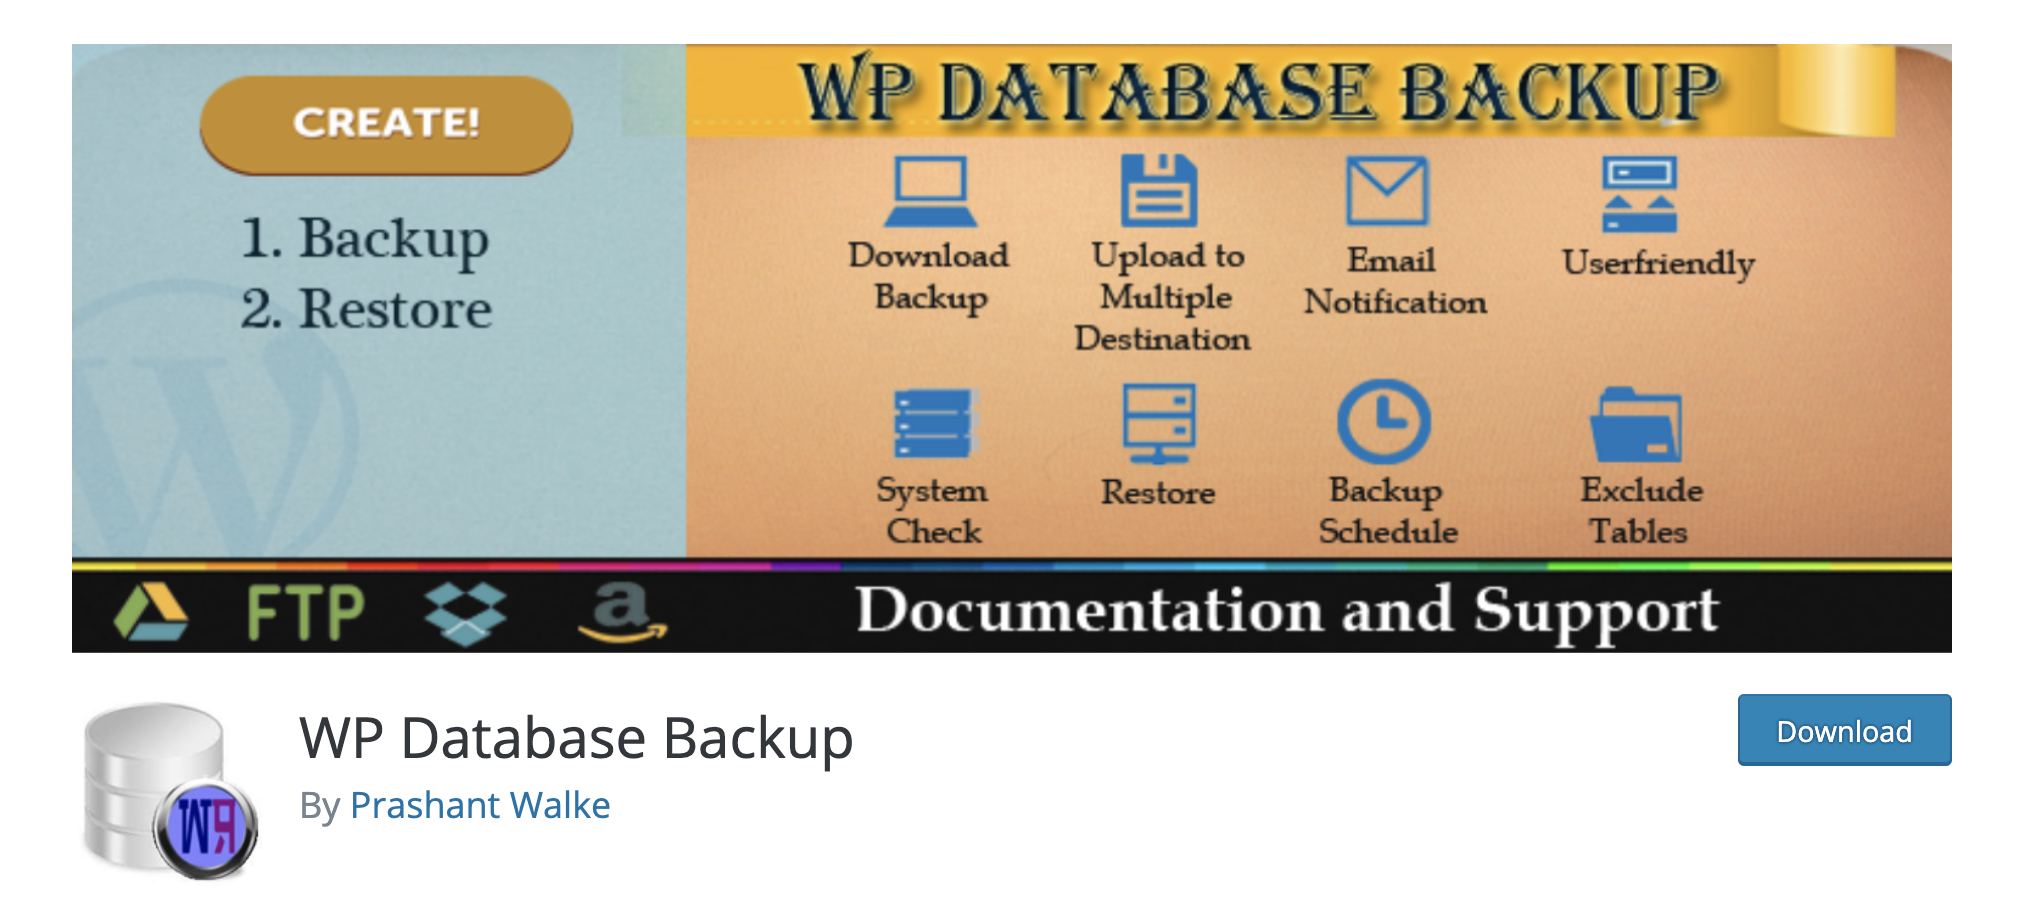 wp backup scheduler restore